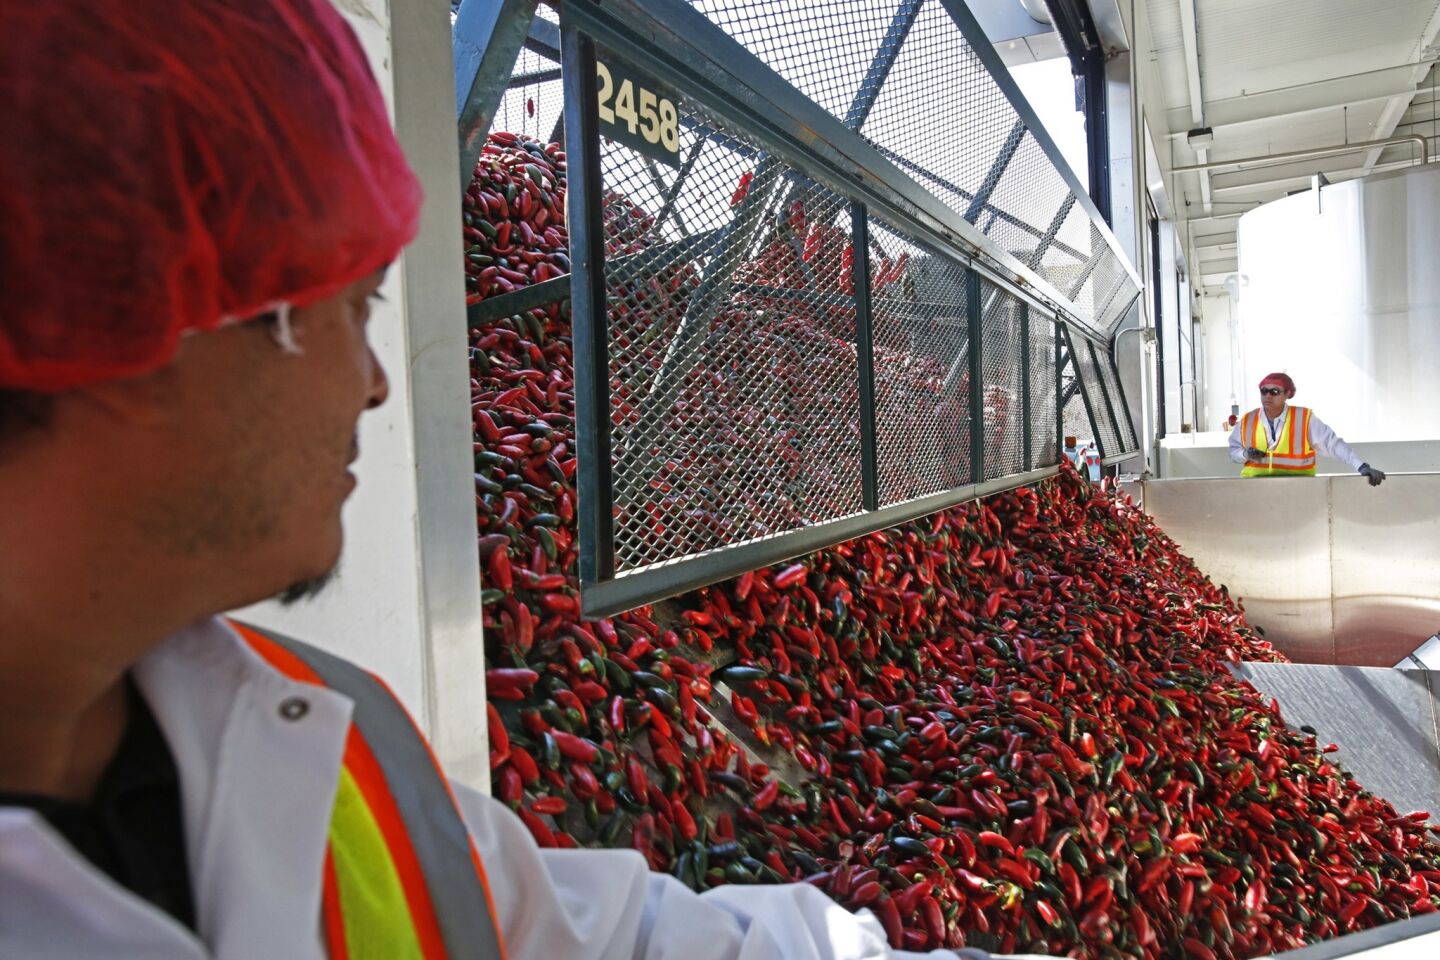 Sriracha fans